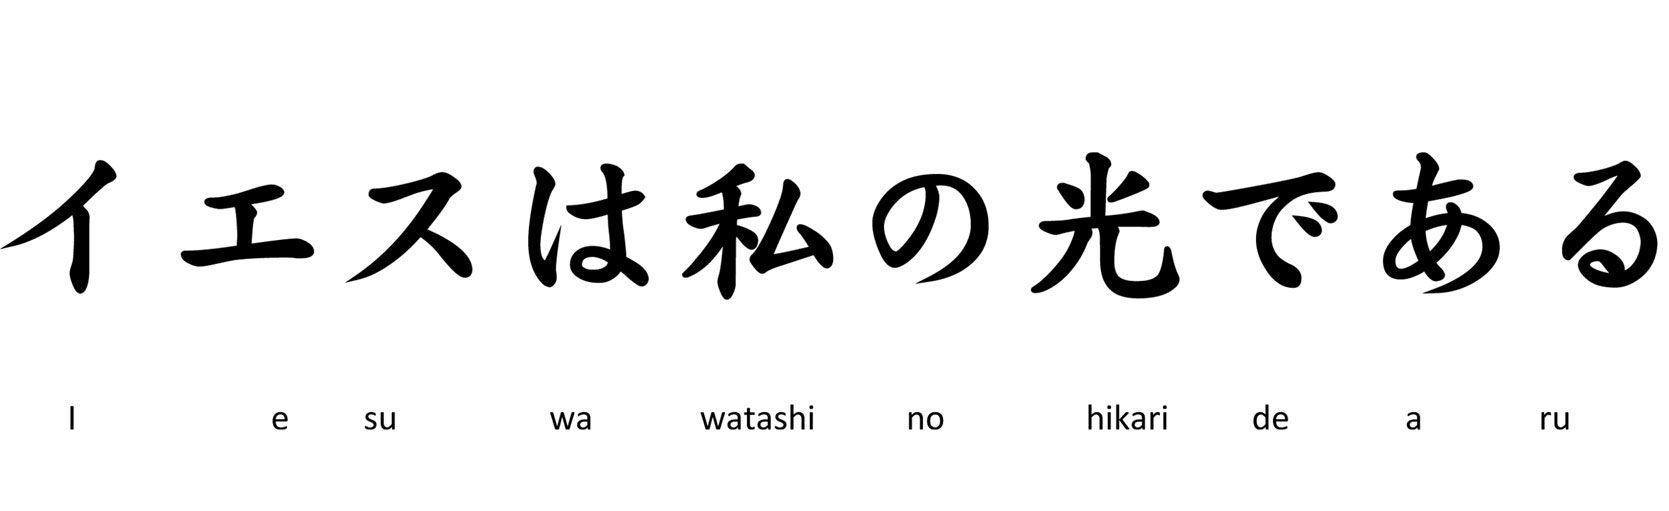 Aula De Japonês Kanji No Dia A Dia Japonês Portal Nippobrasil